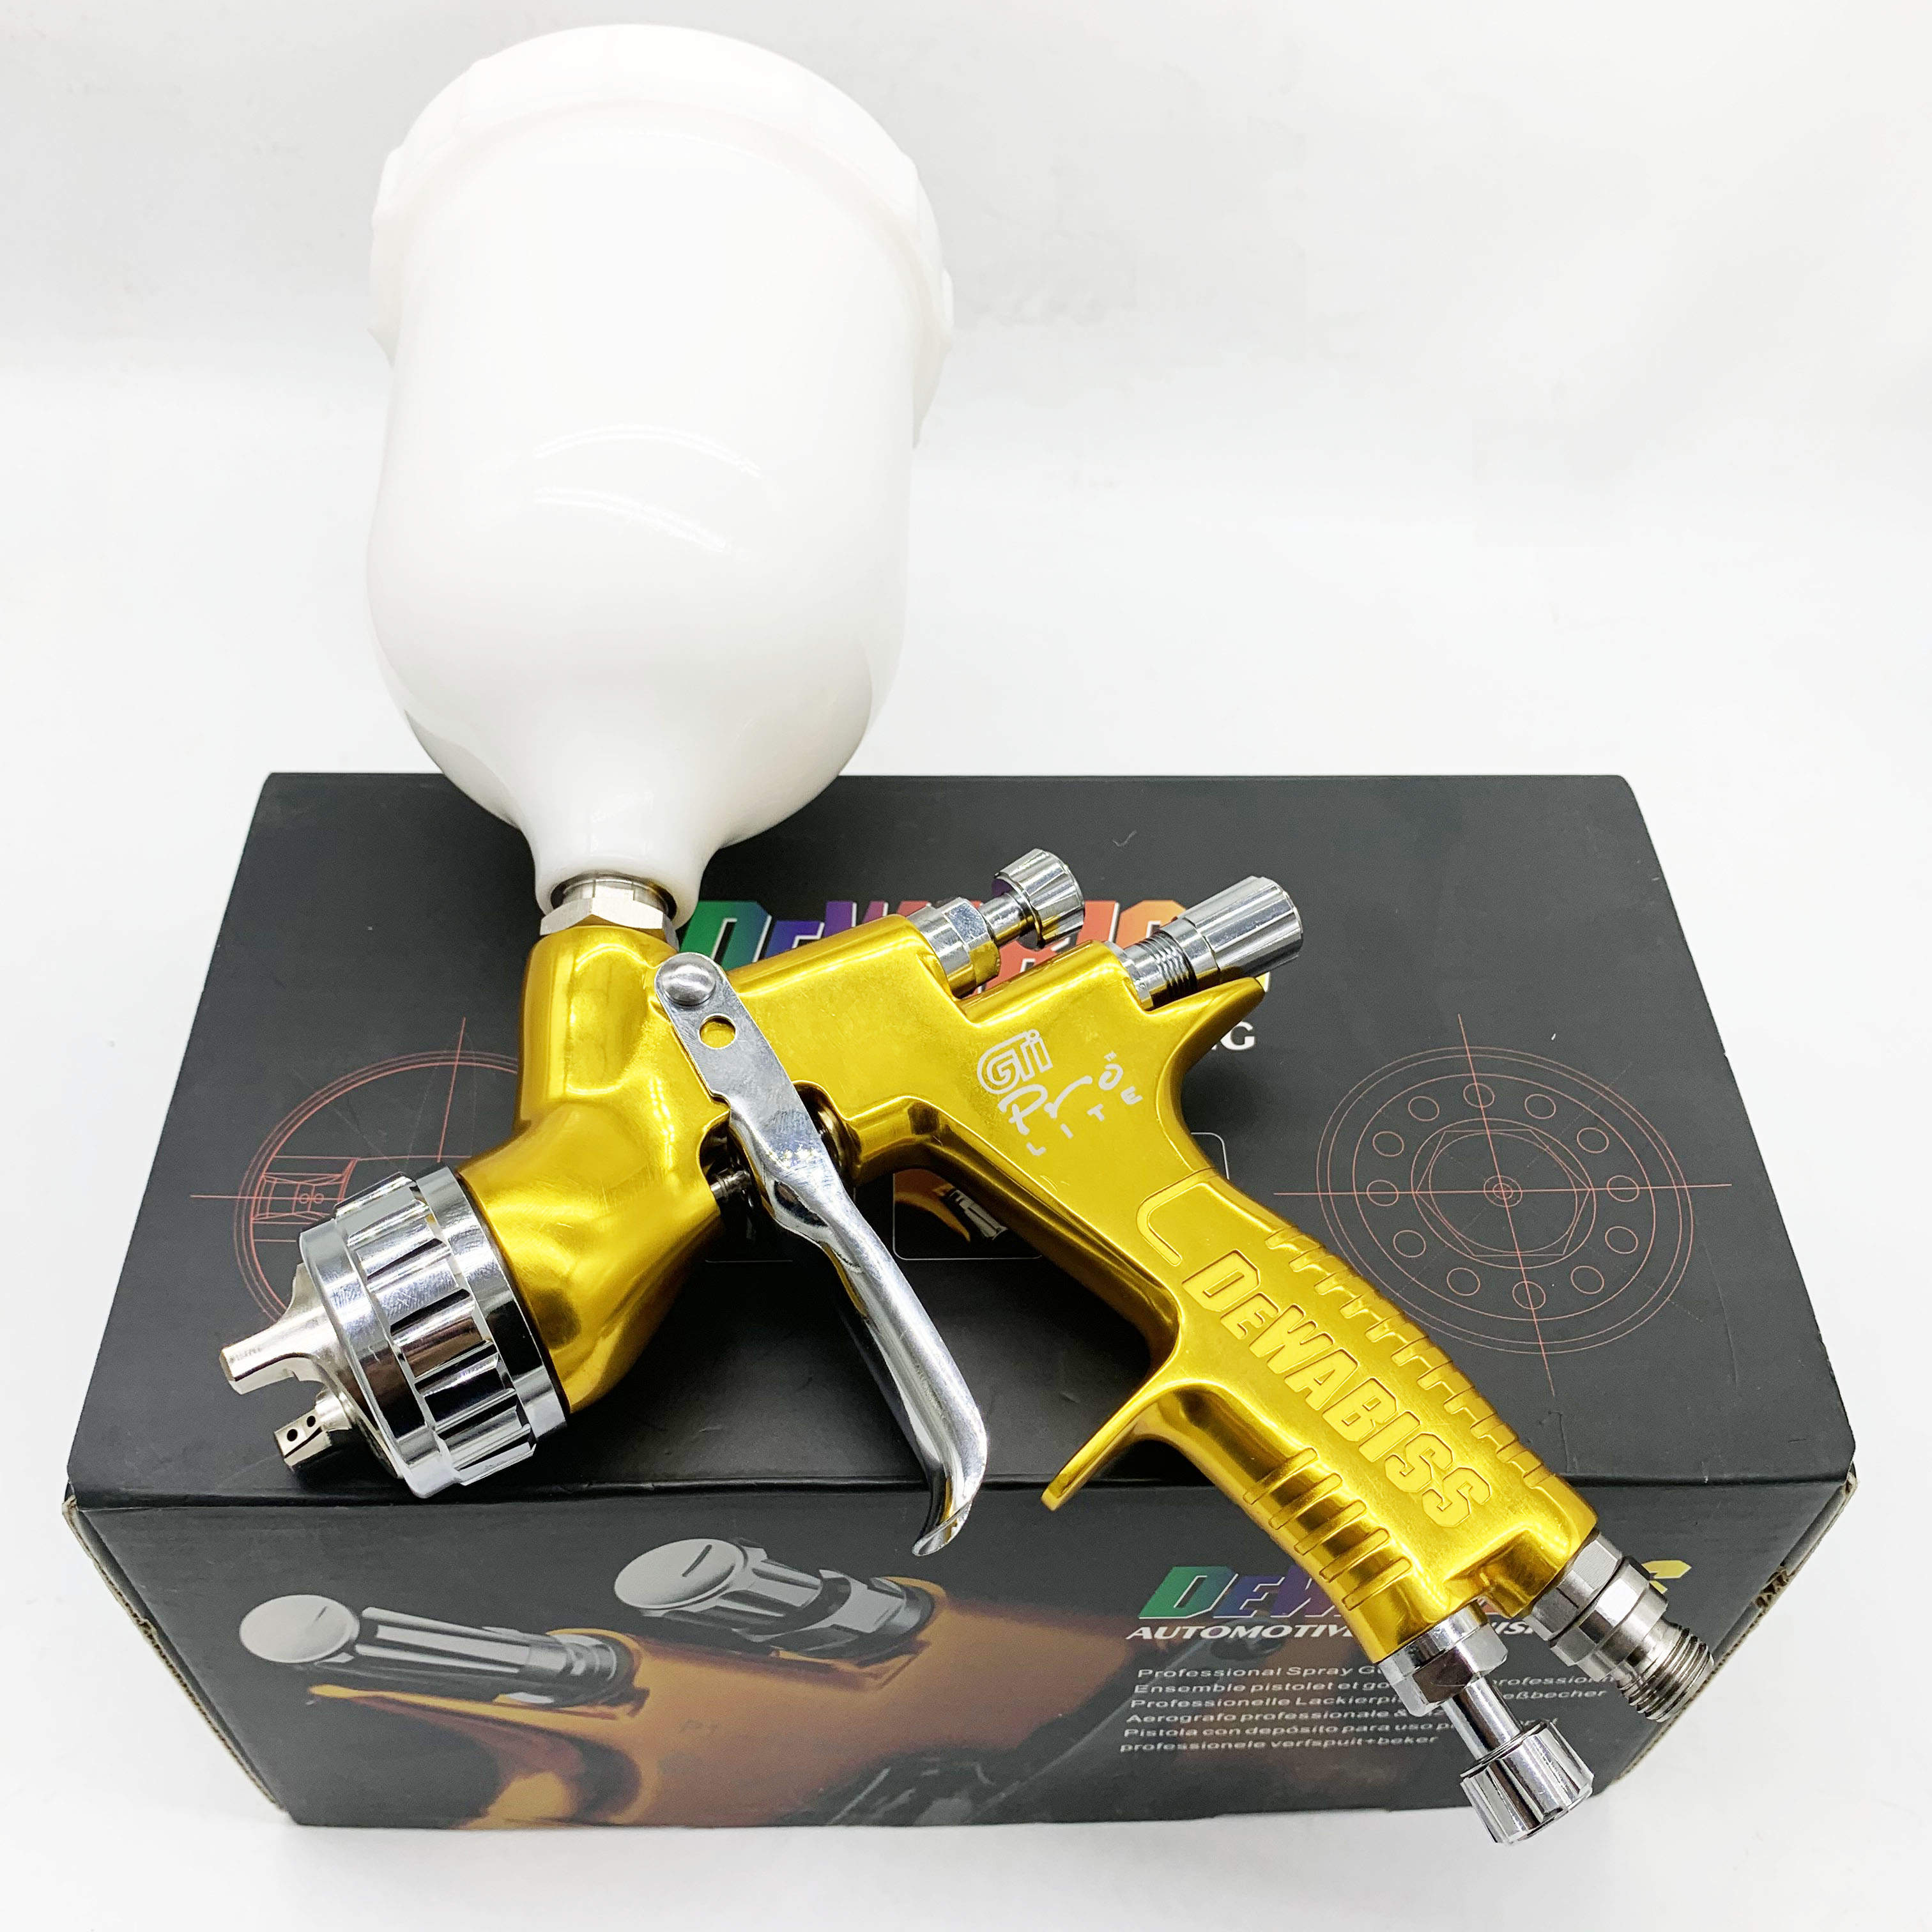 

dewabiss spray paint gun GTI pro TE20/T110 Airbrush airless spray gun for painting cars